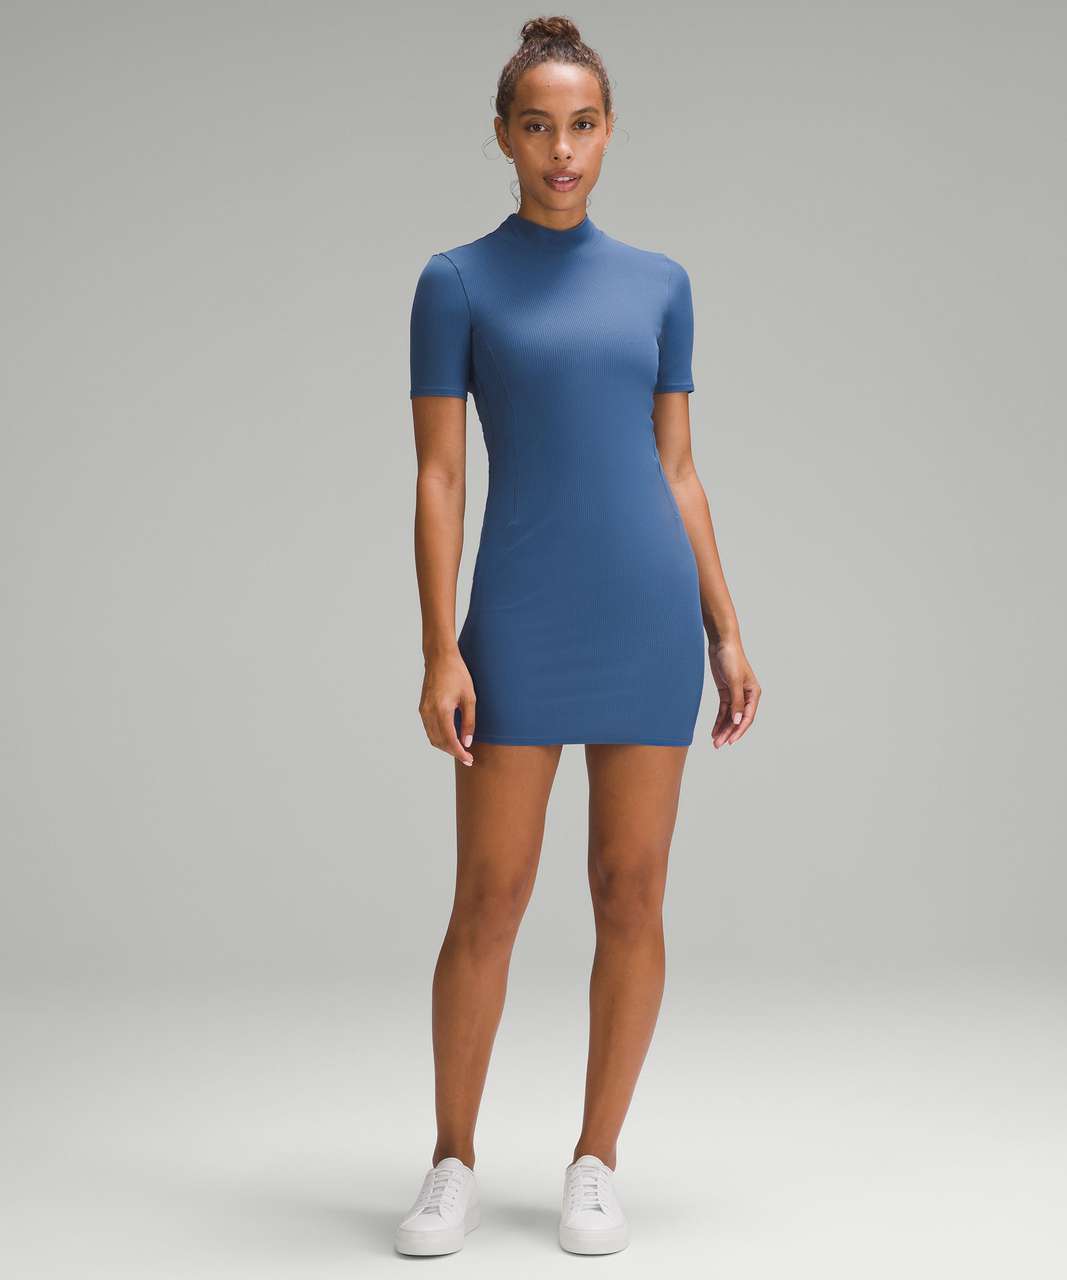 Lululemon All Aligned Ribbed Short-Sleeve Dress - Pitch Blue